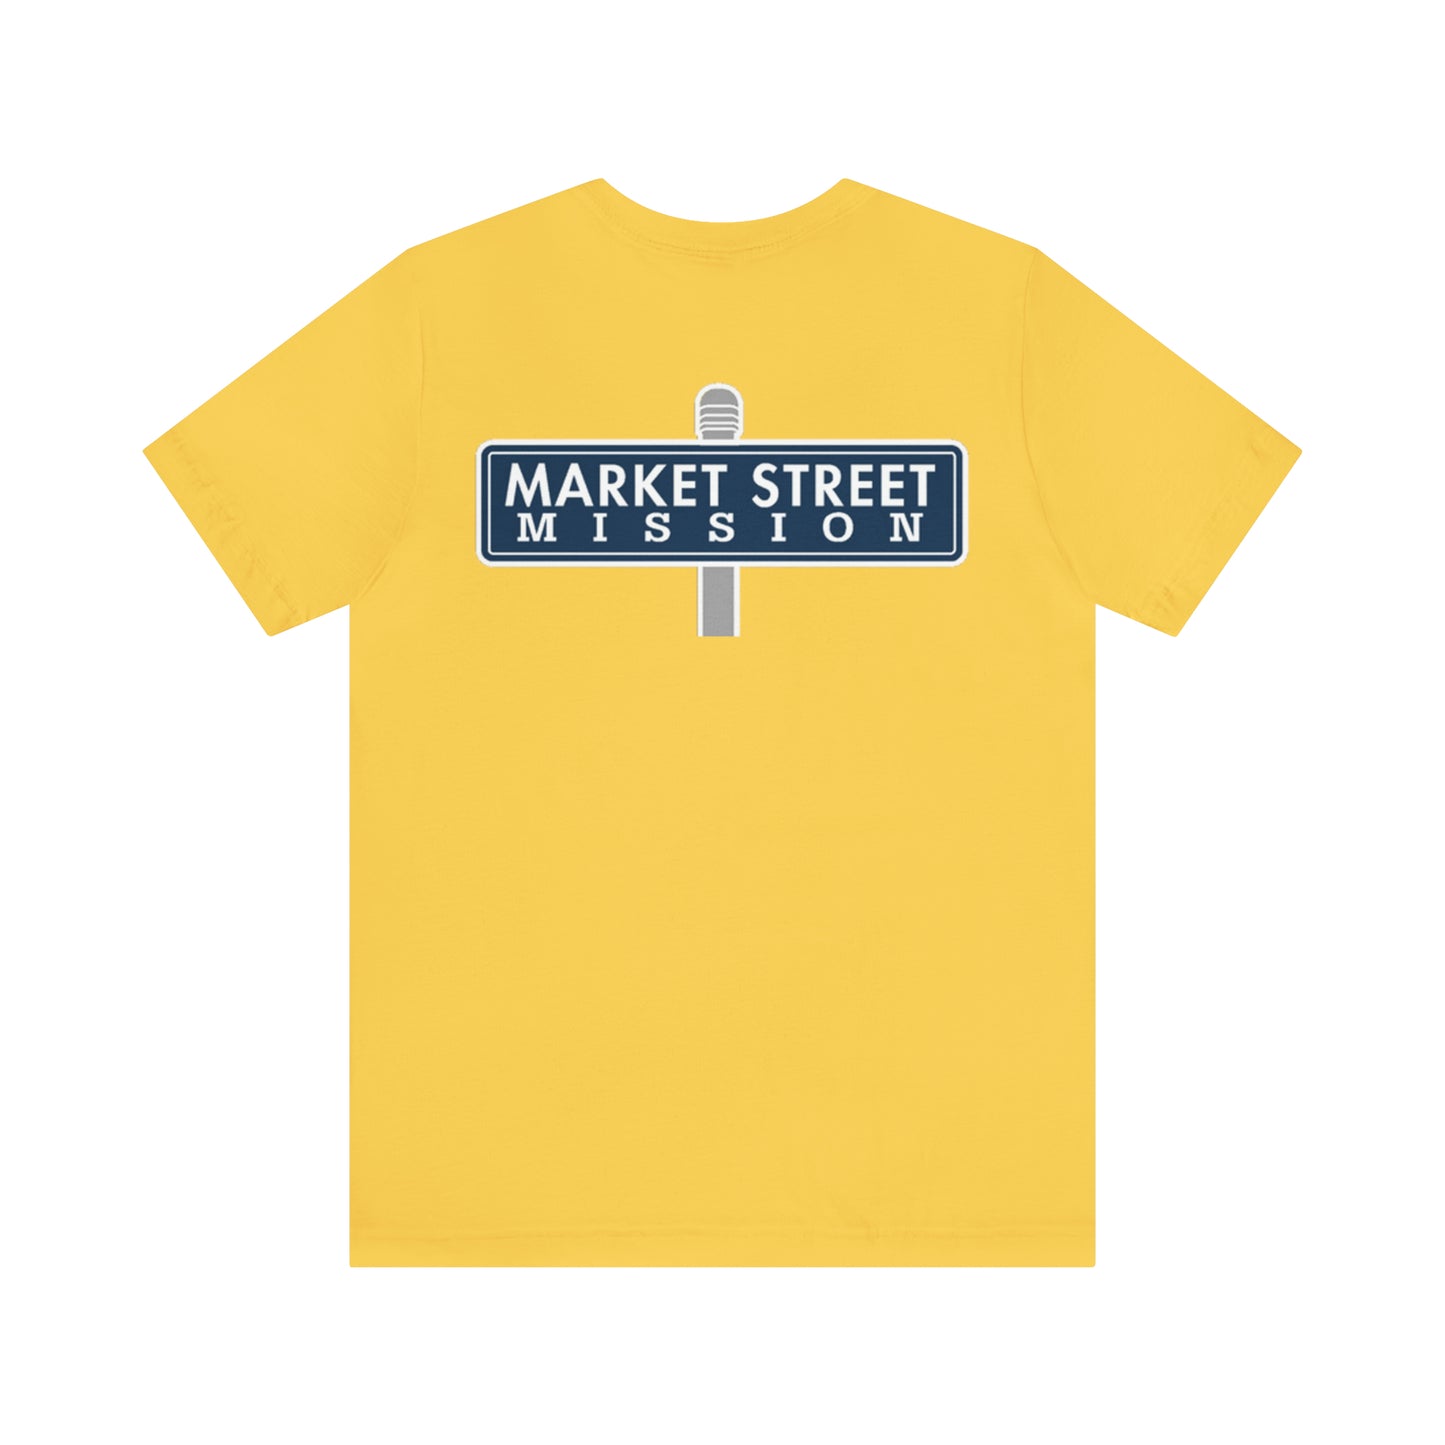 MSM Street Sign T-Shirt  - 11 Colors - BESTSELLER!